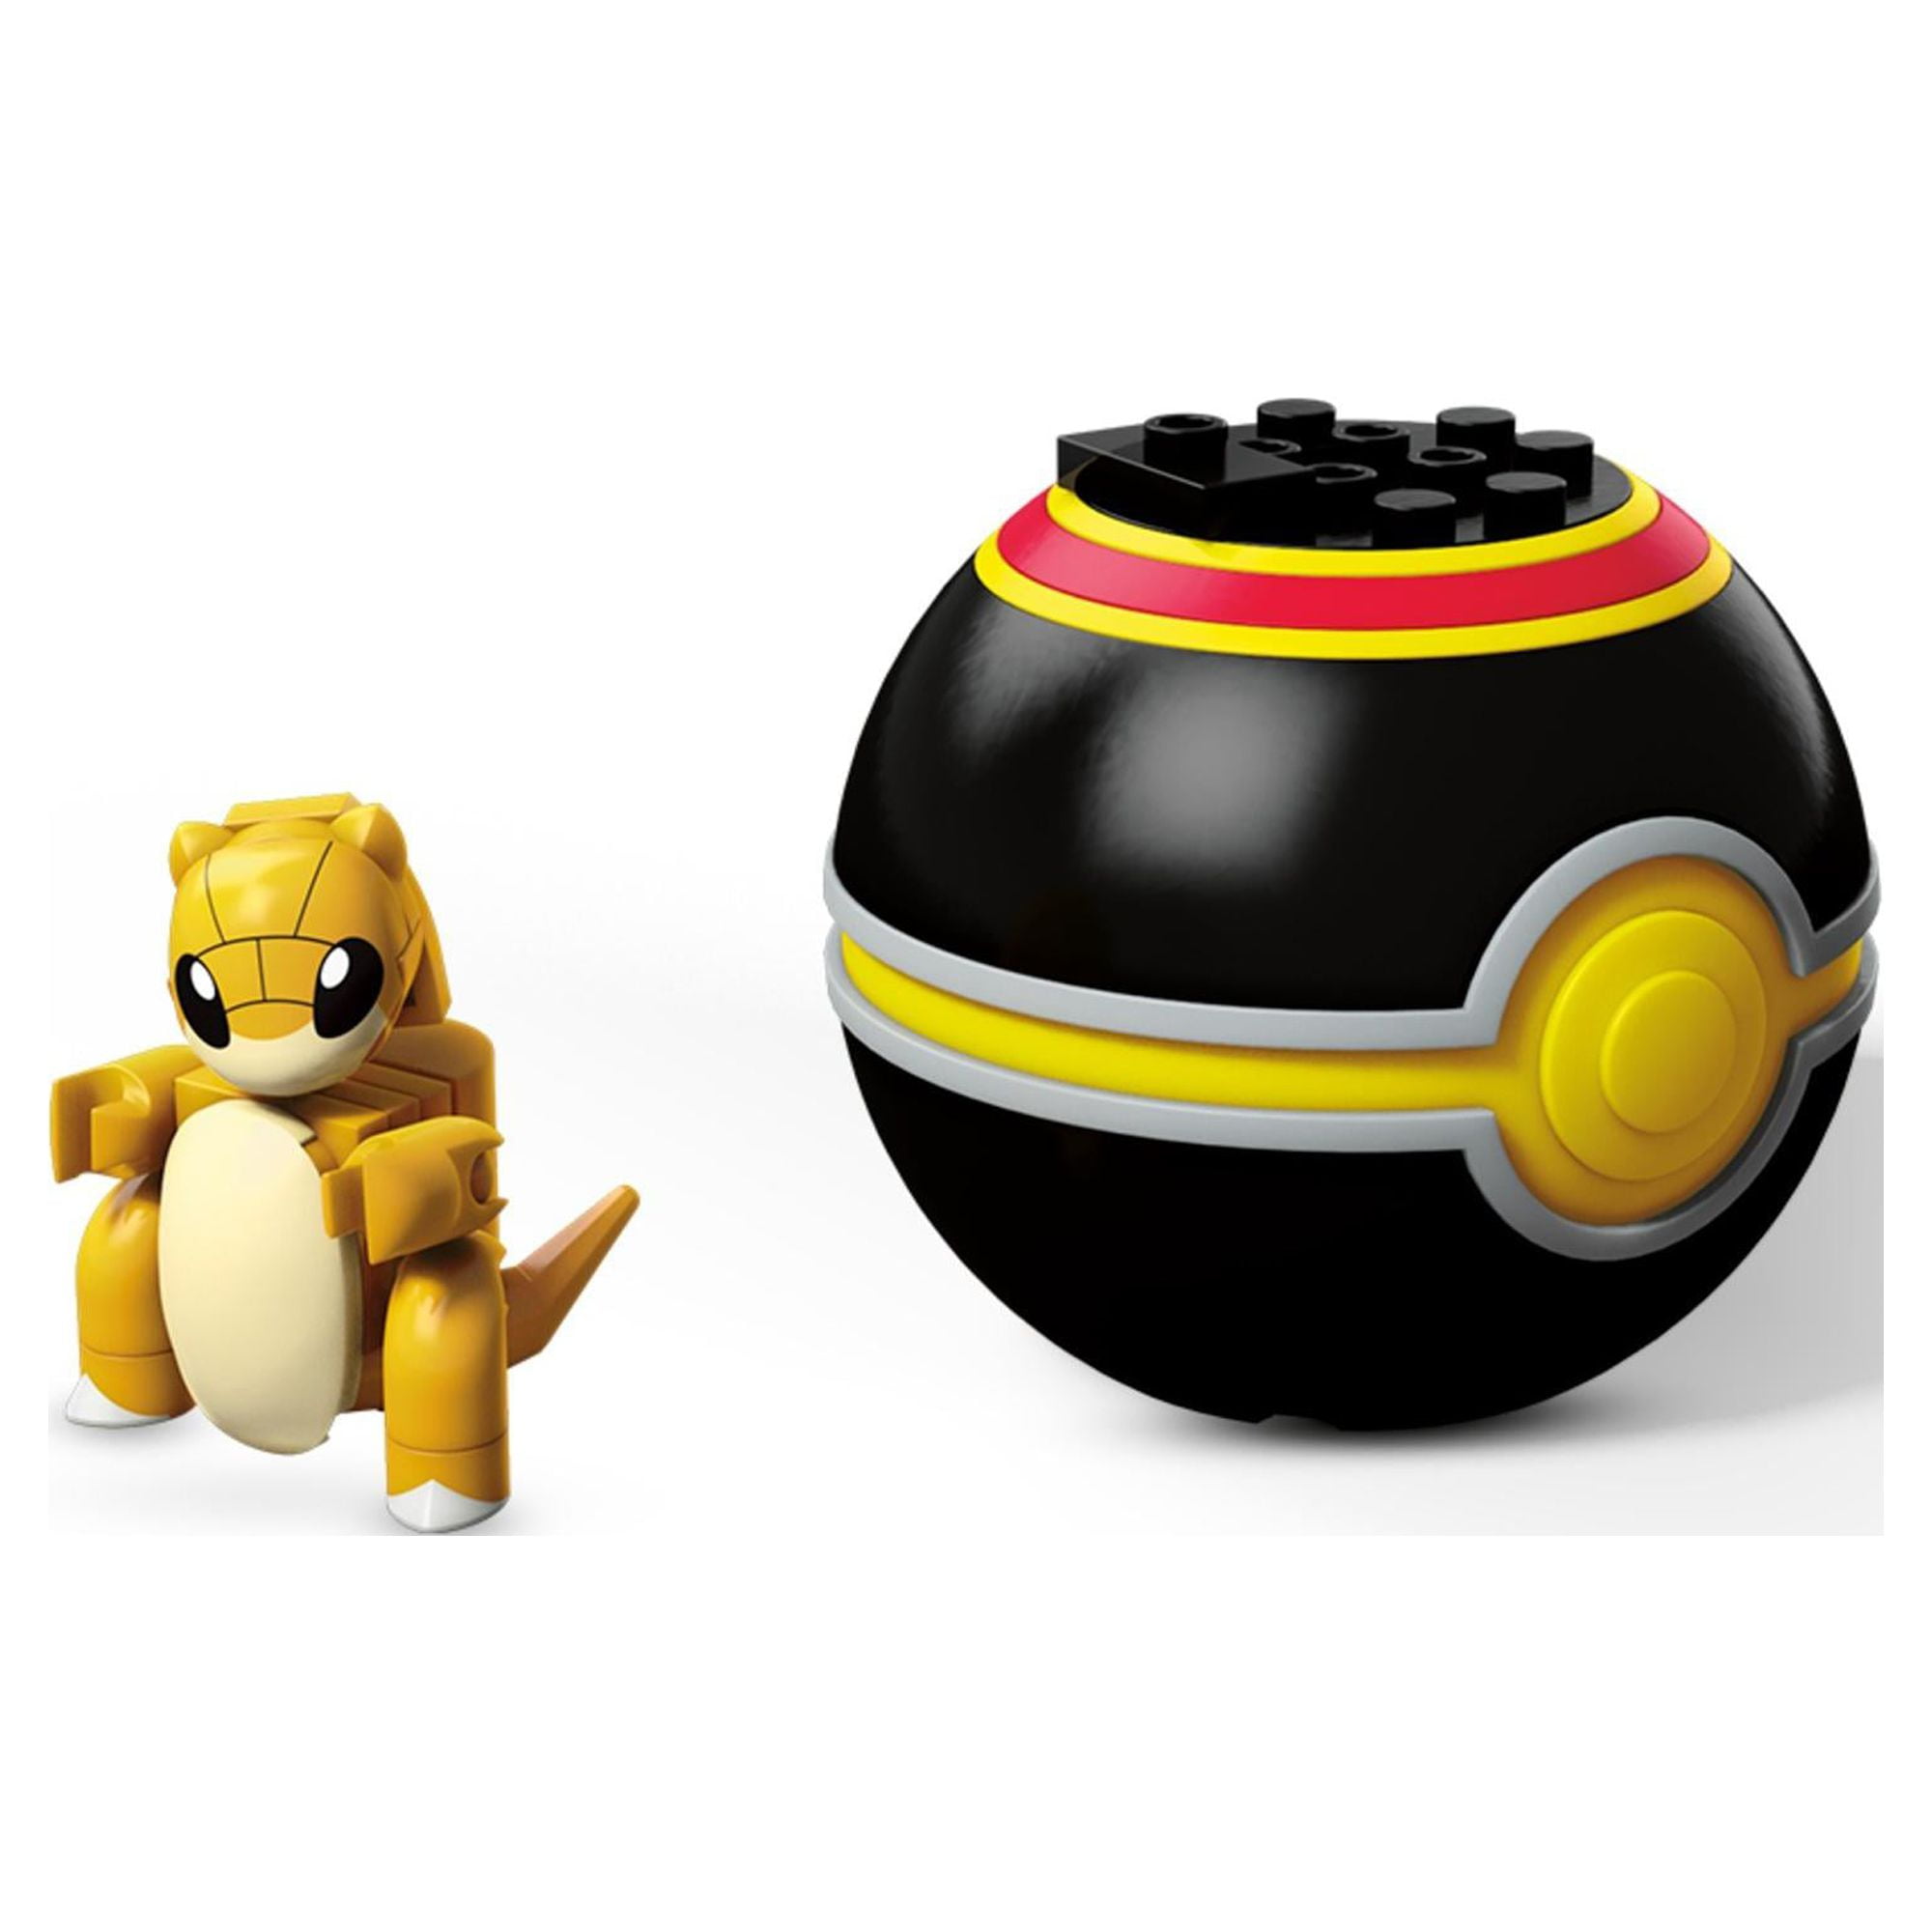 MEGA Pokemon Chikorita Action Figure Building Set with Poke Ball